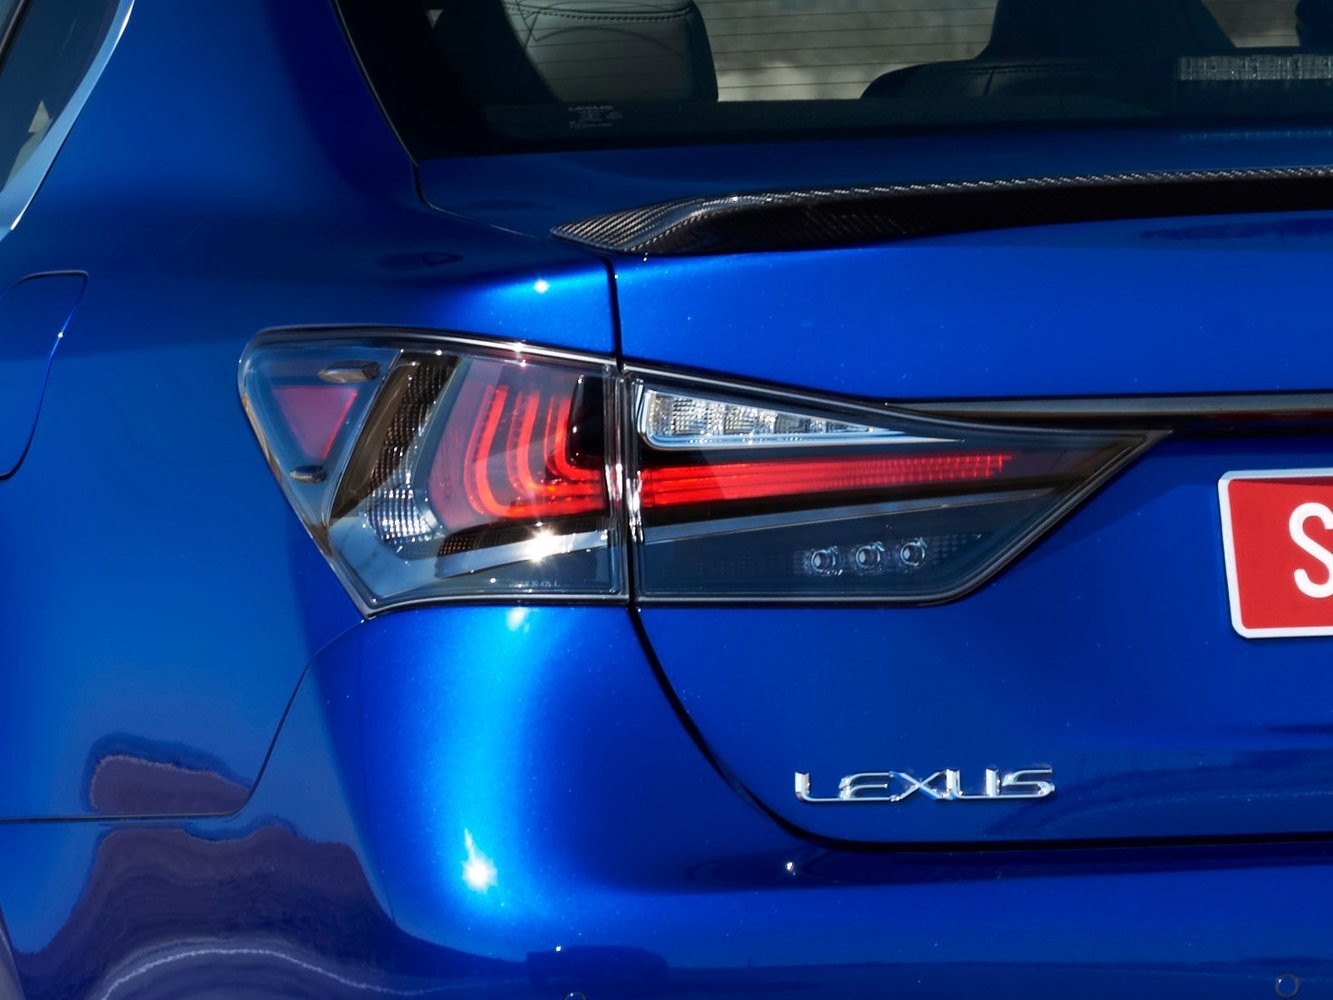 седан Lexus GS F 2015 - 2016г выпуска модификация F 5.0 AT (477 л.с.)